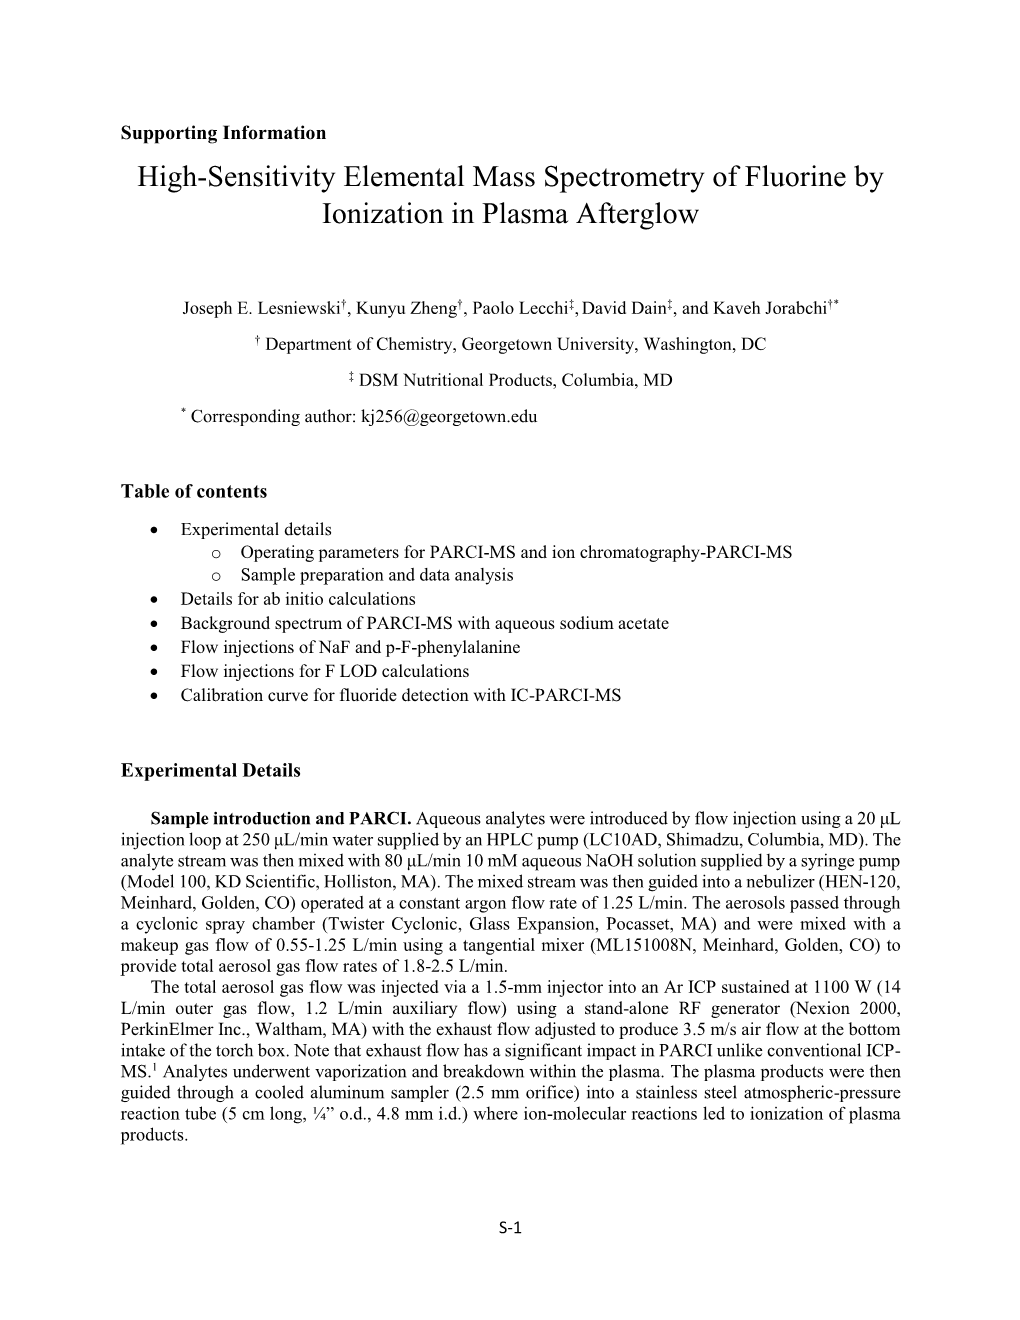 High-Sensitivity Elemental Mass Spectrometry of Fluorine by Ionization in Plasma Afterglow